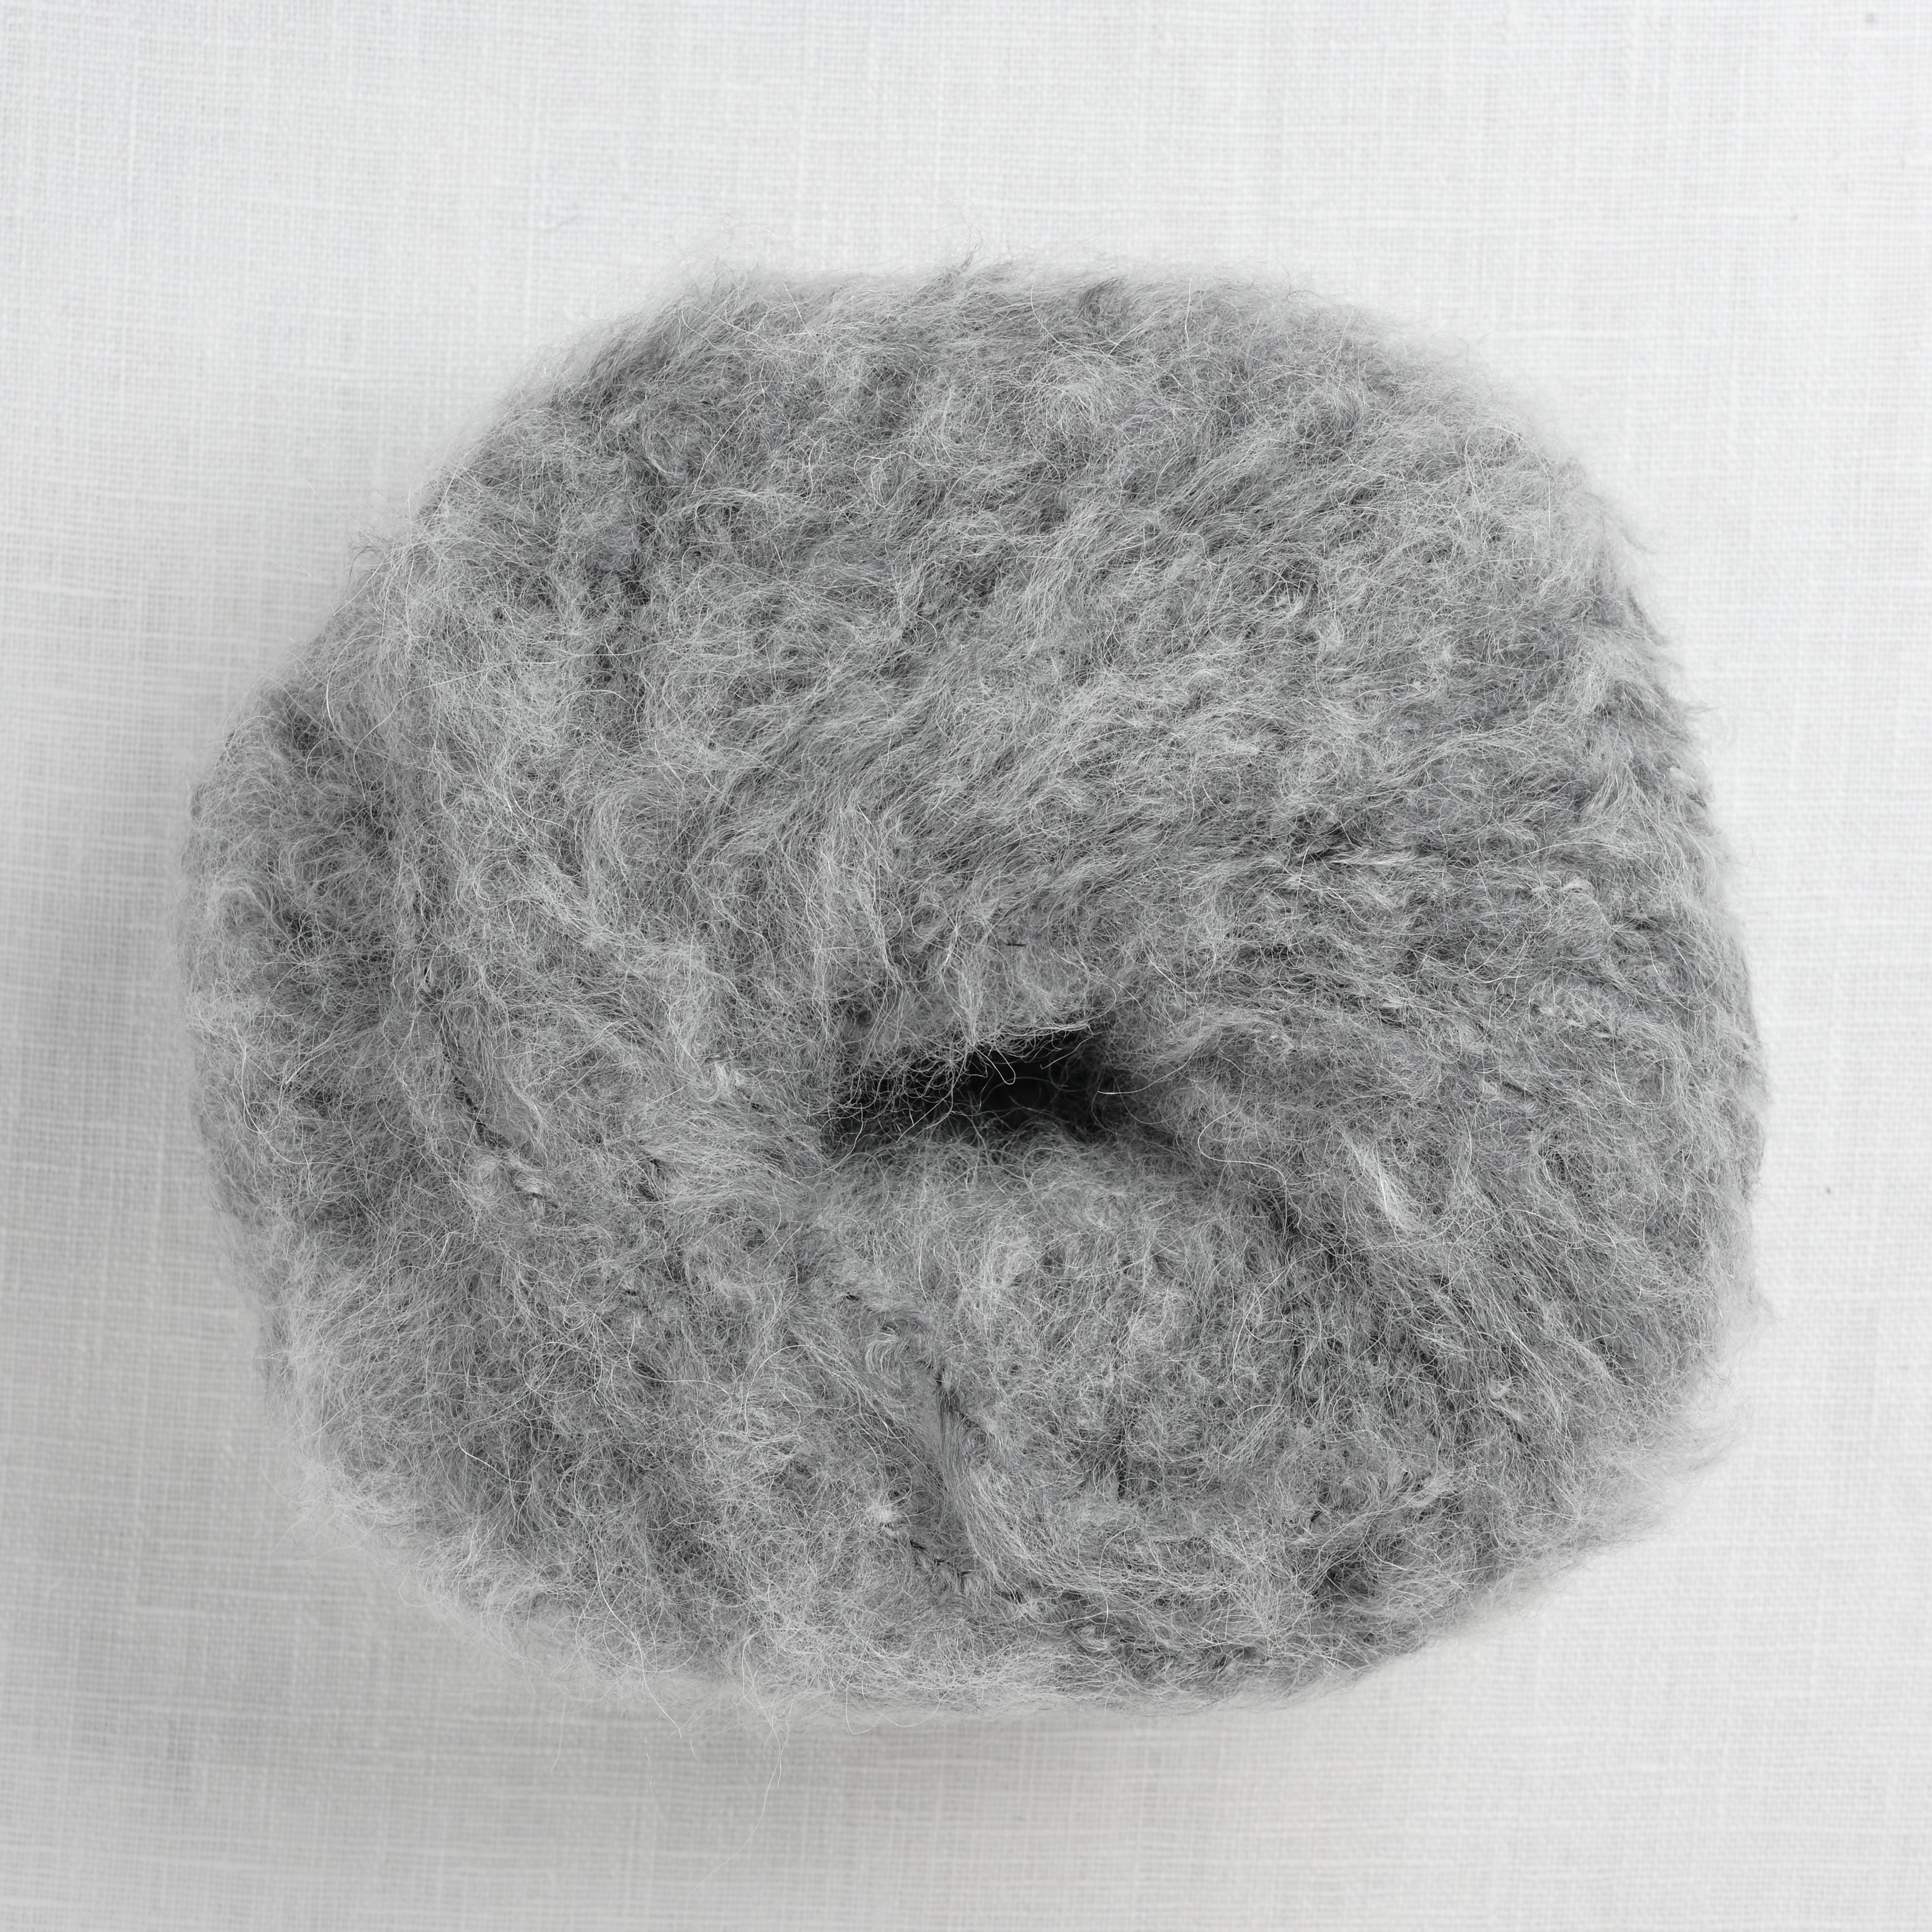 Rowan Soft Boucle Yarn, Shrimp - 601 - Hobiumyarns